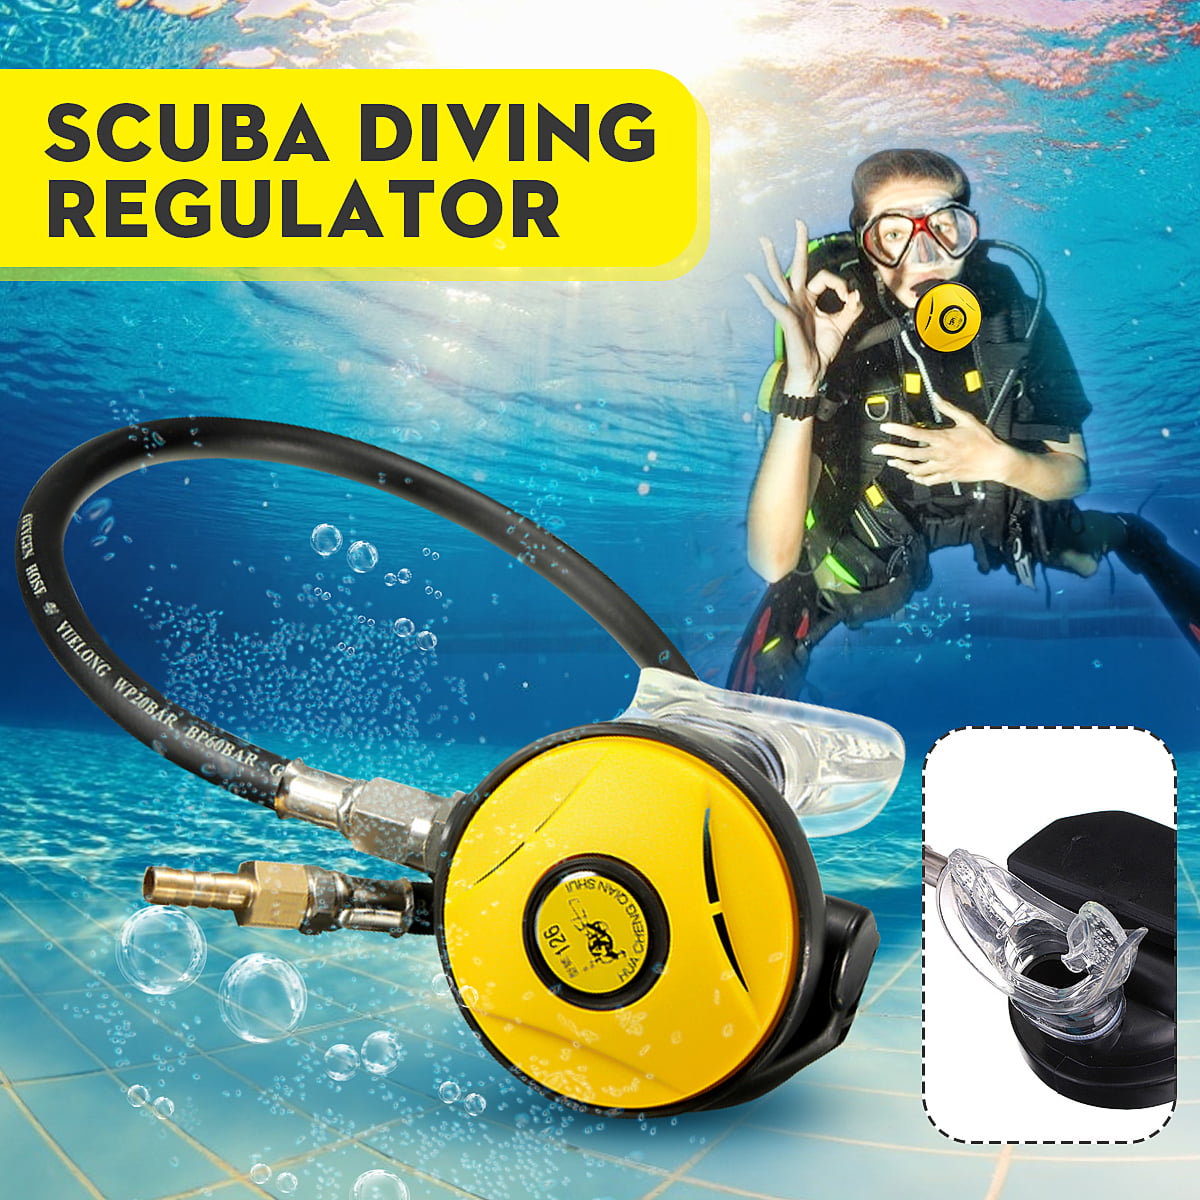 Water Sports Scuba Explorer Diving 2nd Stage Regulator Octopus Hookah 